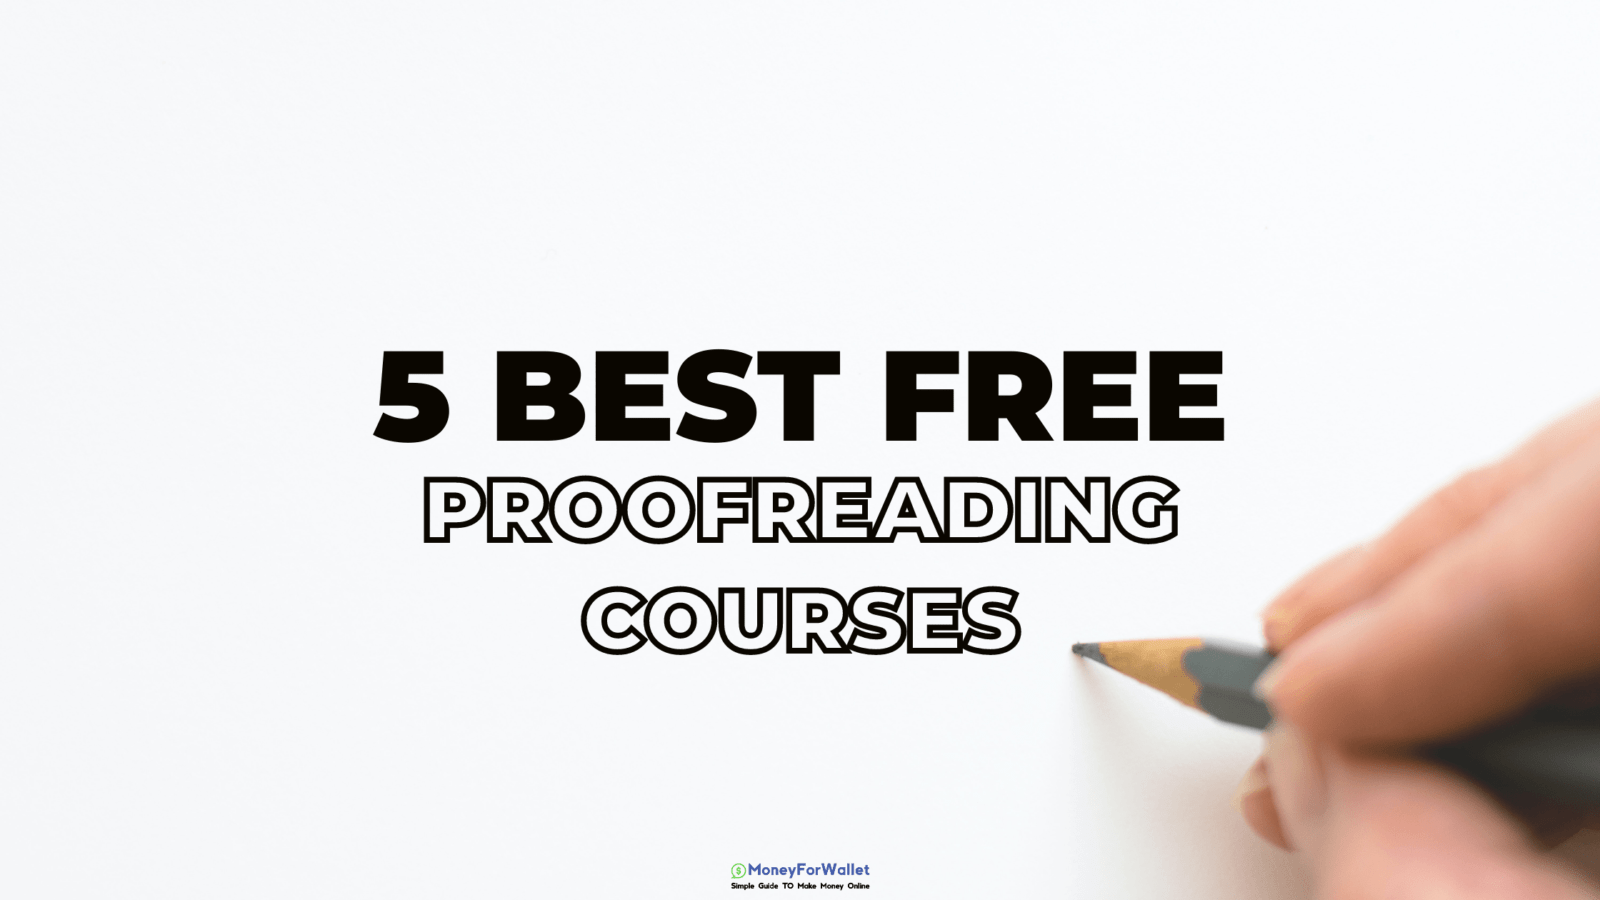 proofreading courses online free australia